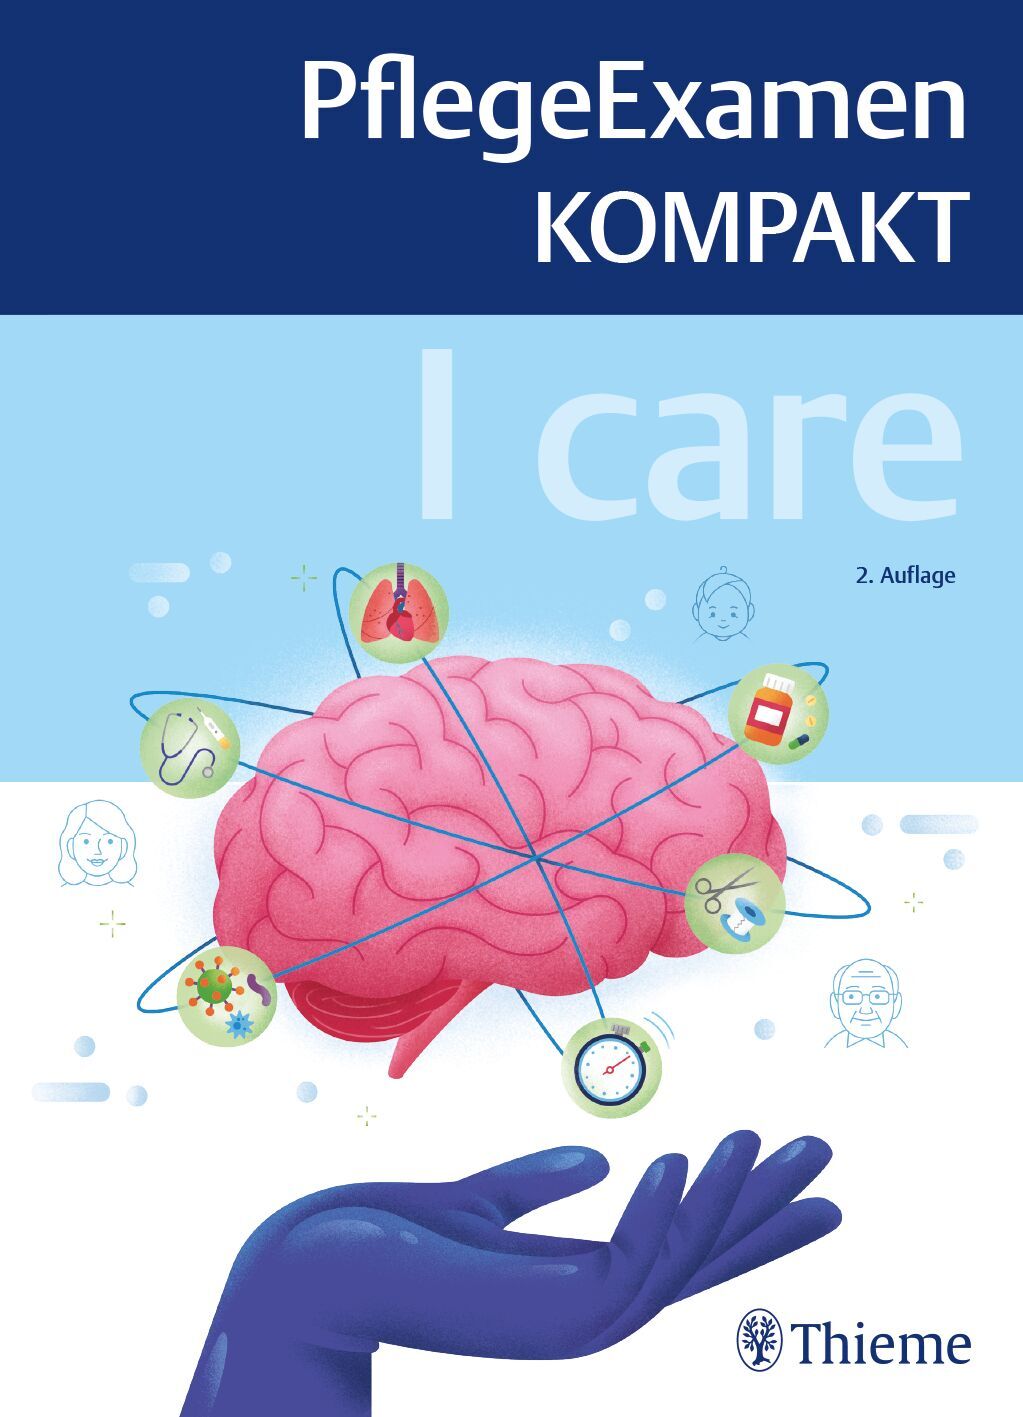 I care - PflegeExamen KOMPAKT, 9783132439382